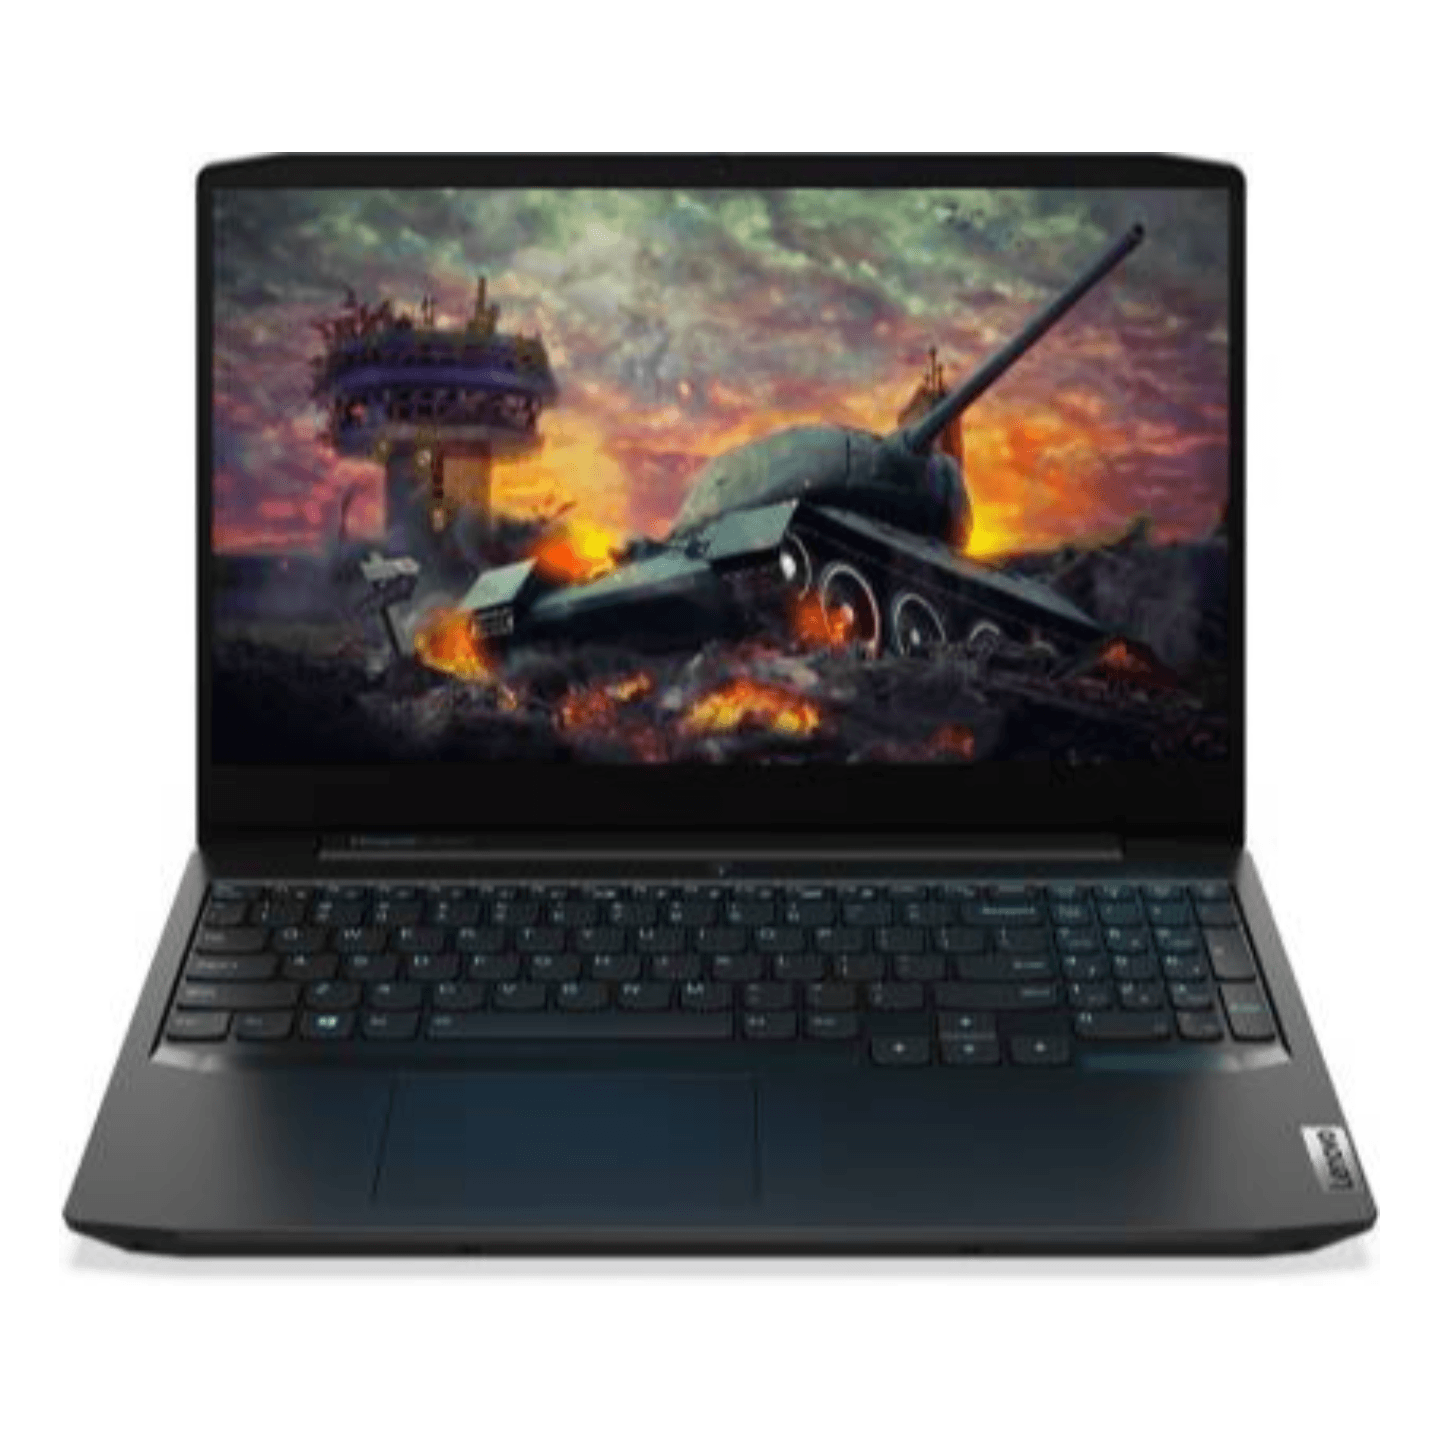 Lenovo Ideapad Gaming 3 Ryzen 5 Hexa Core 4600H - (8 GB/1 TB HDD/256 GB SSD/Windows 10 Home/4 GB Graphics/NVIDIA GeForce GTX 1650 Ti) 15ARH05 Gaming Laptop  (15.6 inch, Onyx Black, 2.2 kg, With MS Office)